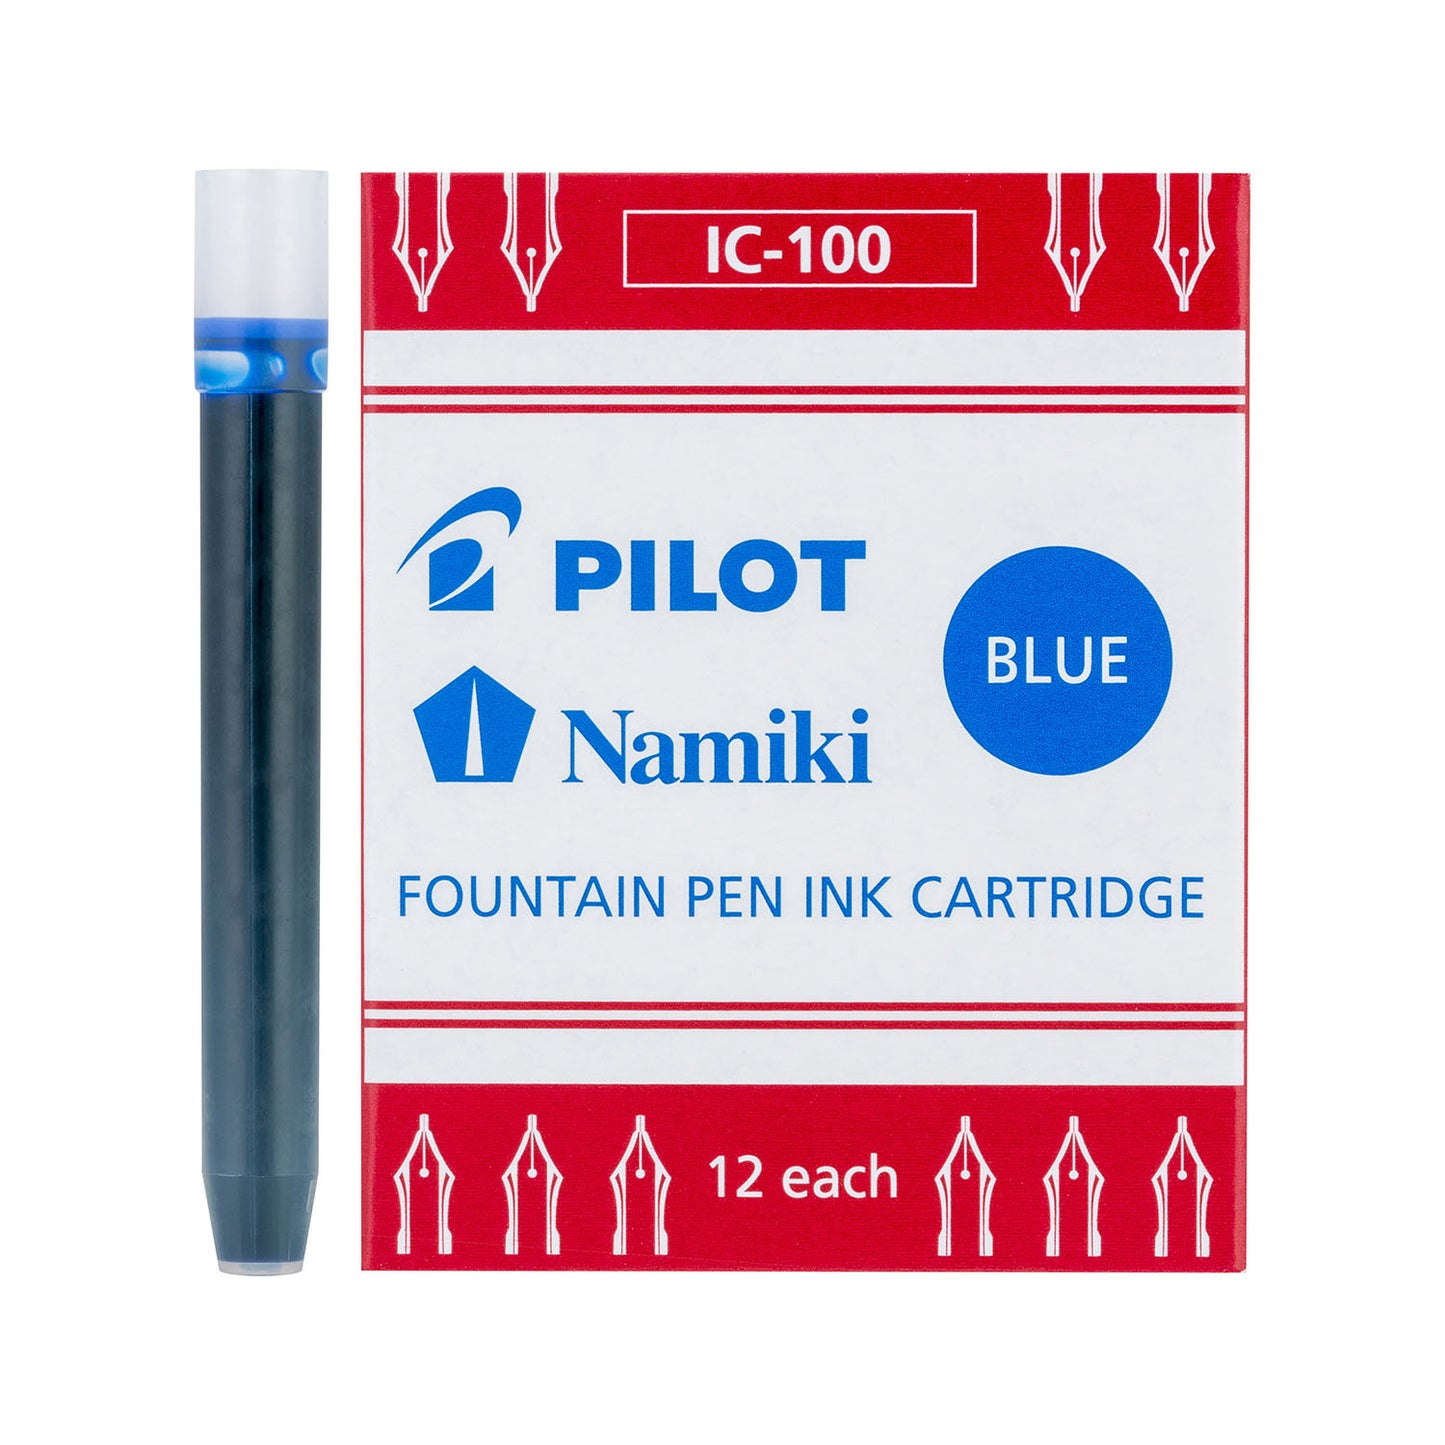 Pilot Namiki Fountain Pen Ink - 12 Cartridges Blue